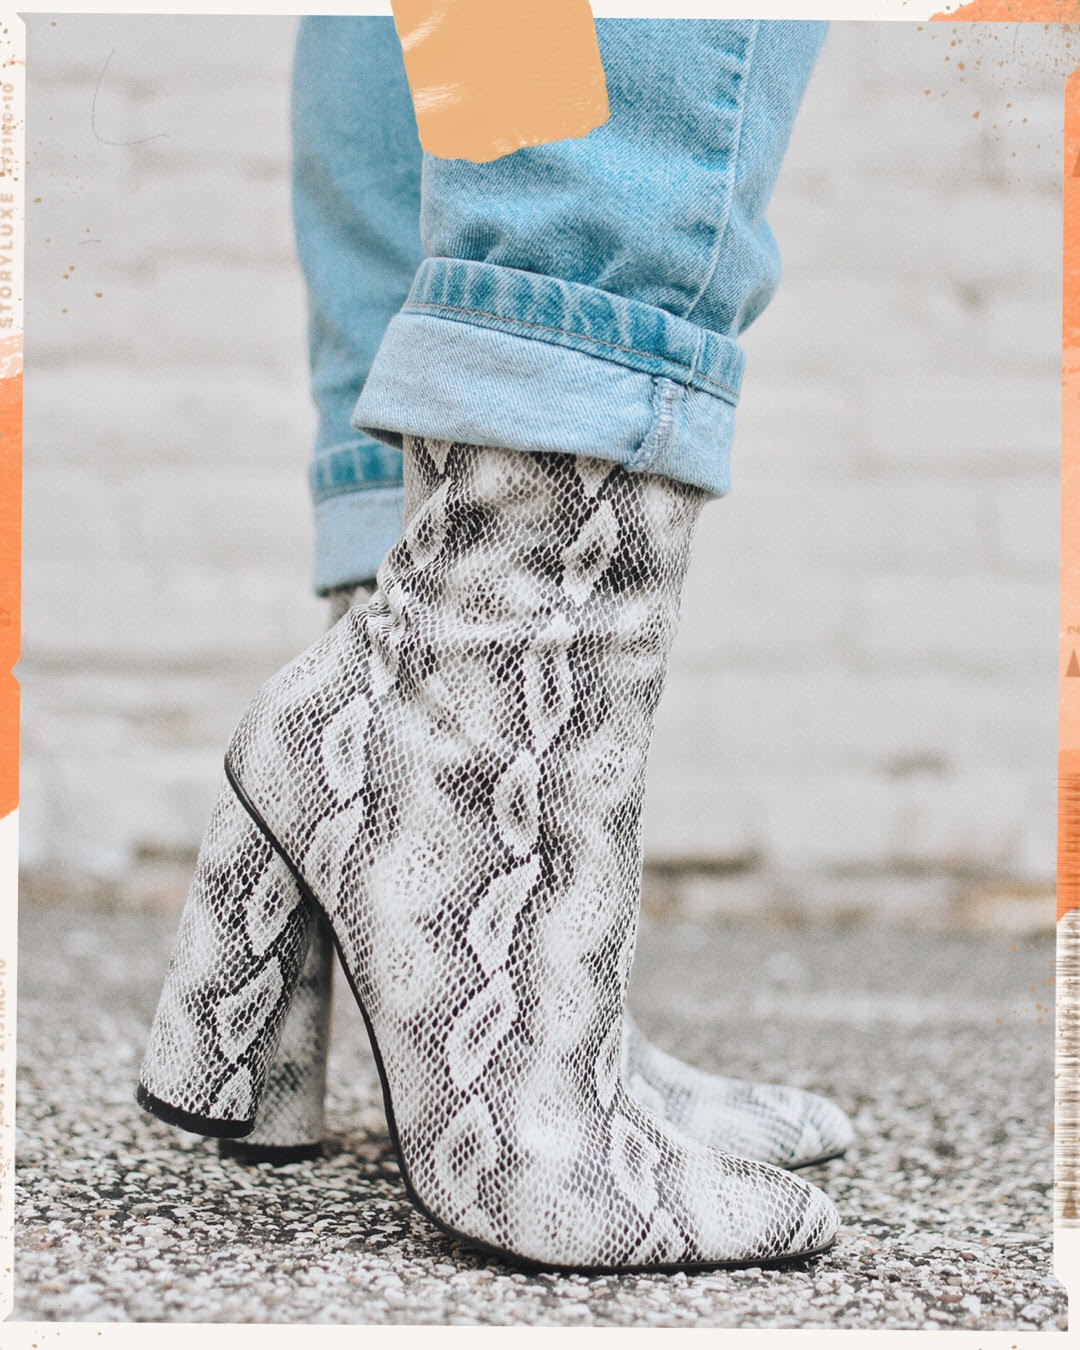  snakeskin-print-booties-vanessa-lambert-style-whatwouldvwear